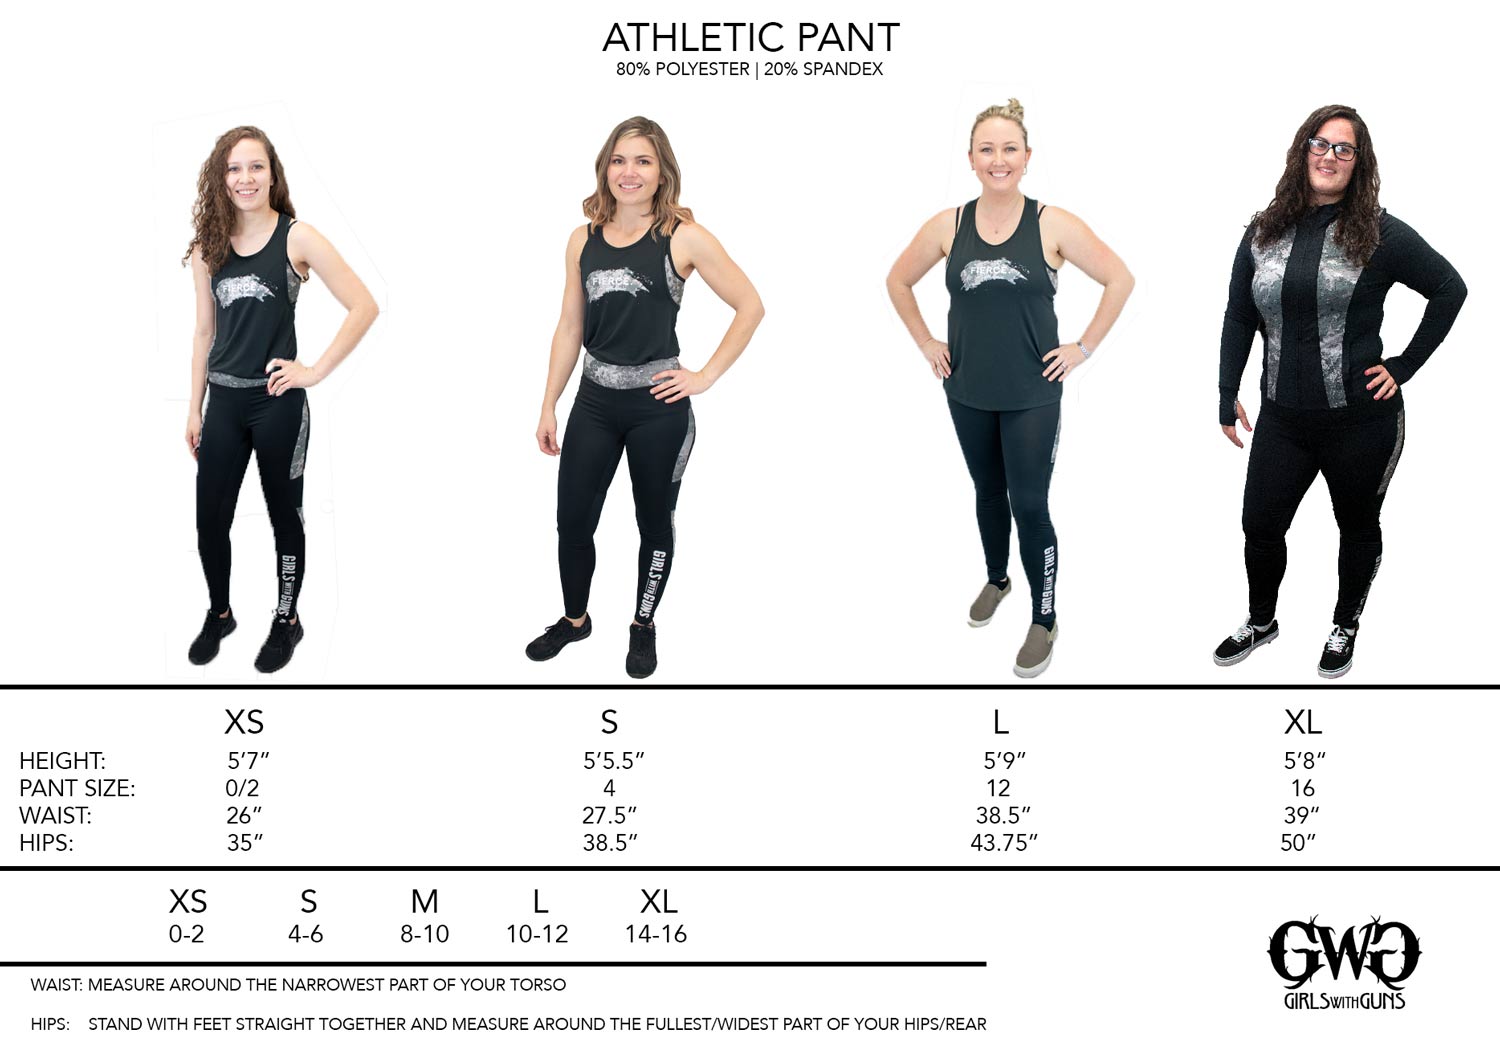 https://gwgclothing.com/size-chart-athletic-pants/athletic-pant-size-chart/